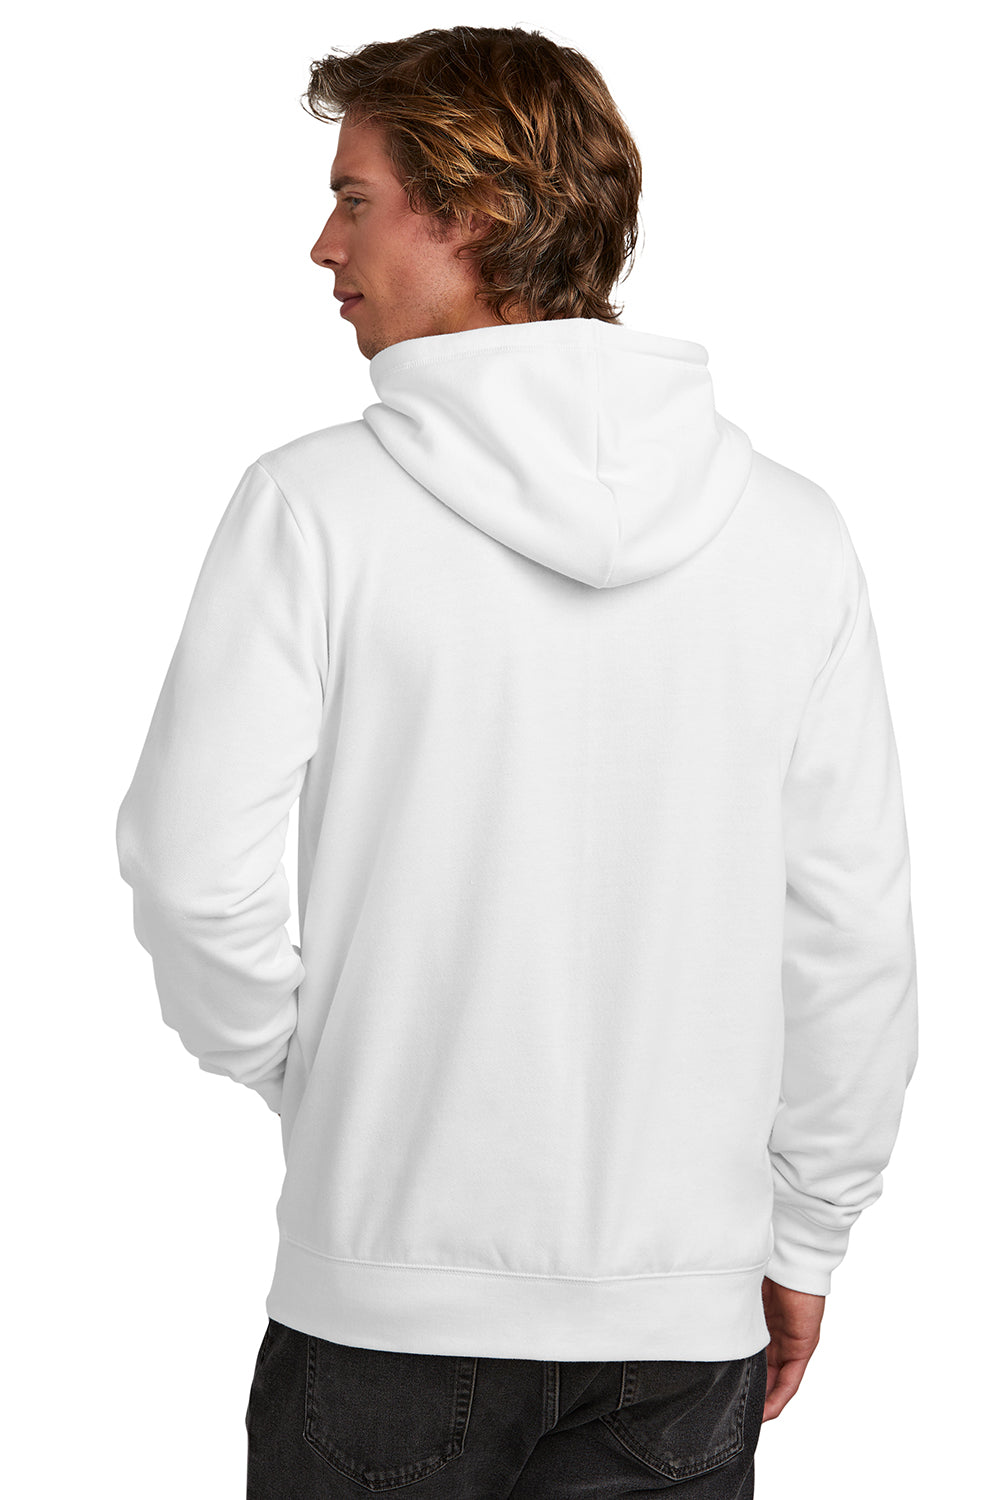 New Era NEA551 Mens Comeback Fleece Full Zip Hooded Sweatshirt Hoodie White Back